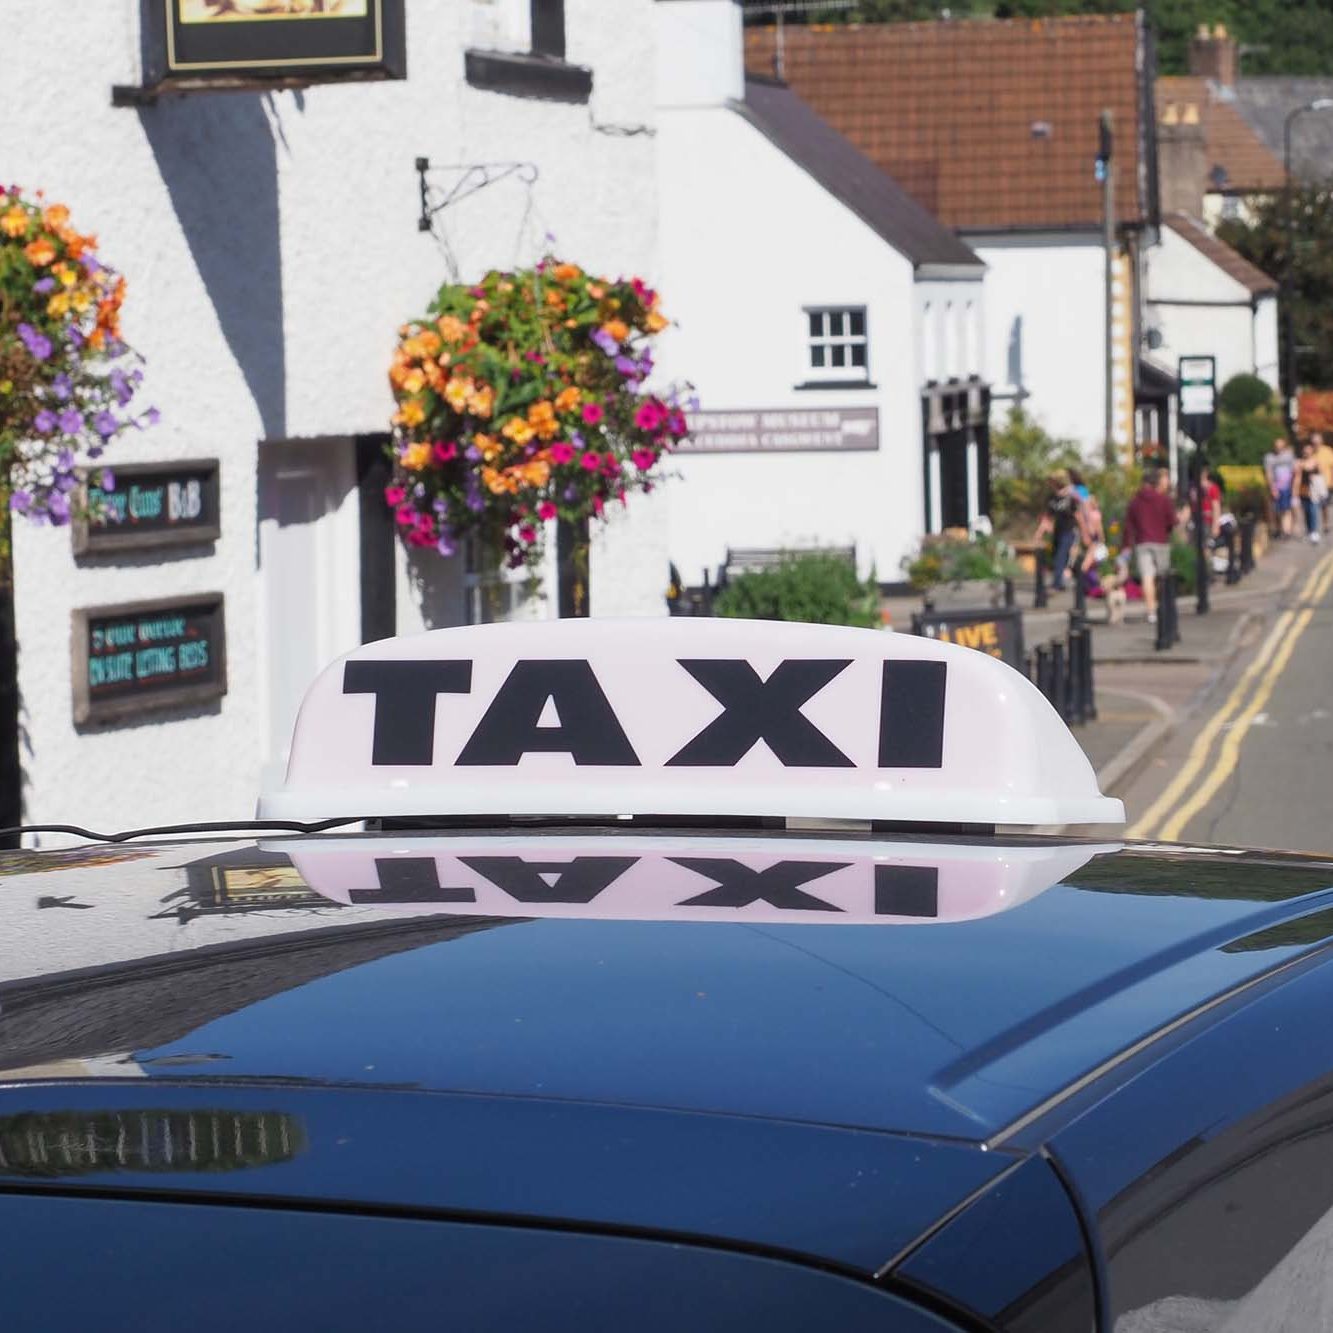 CHEPSTOW, UK - CIRCA SEPTEMBER 2019: taxi sign on a car